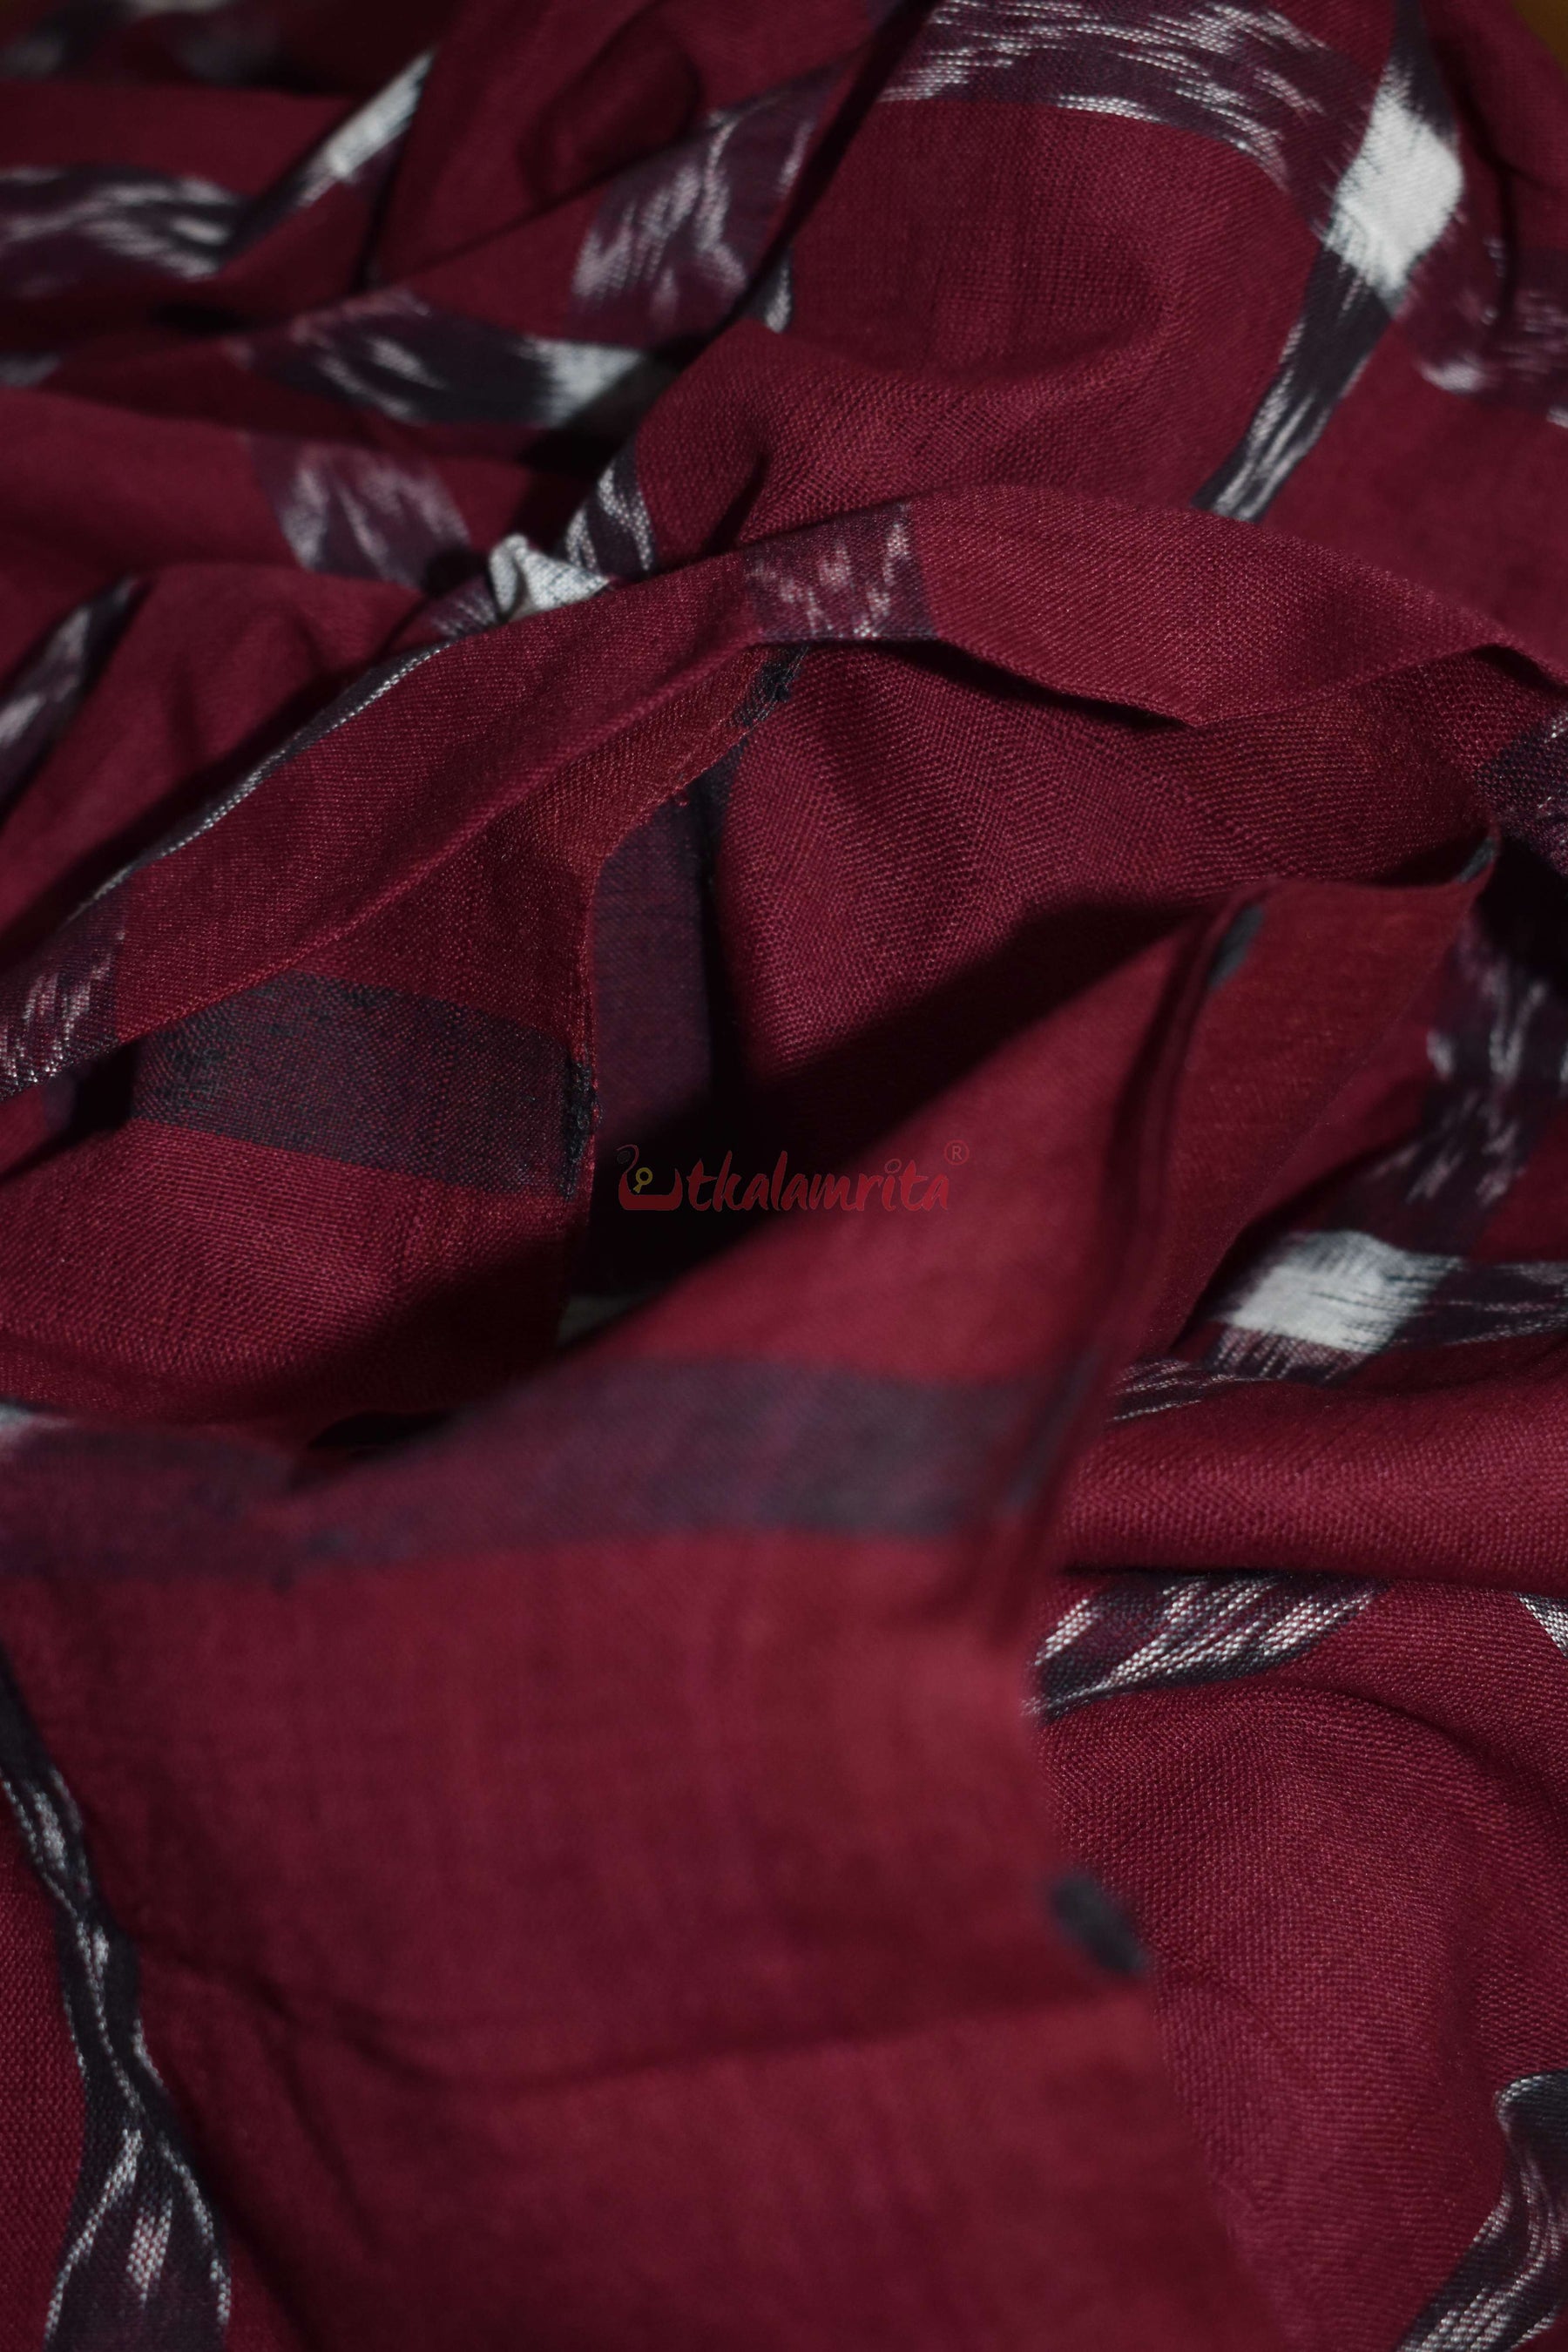 Maroon Pasapali Grid (Fabric)